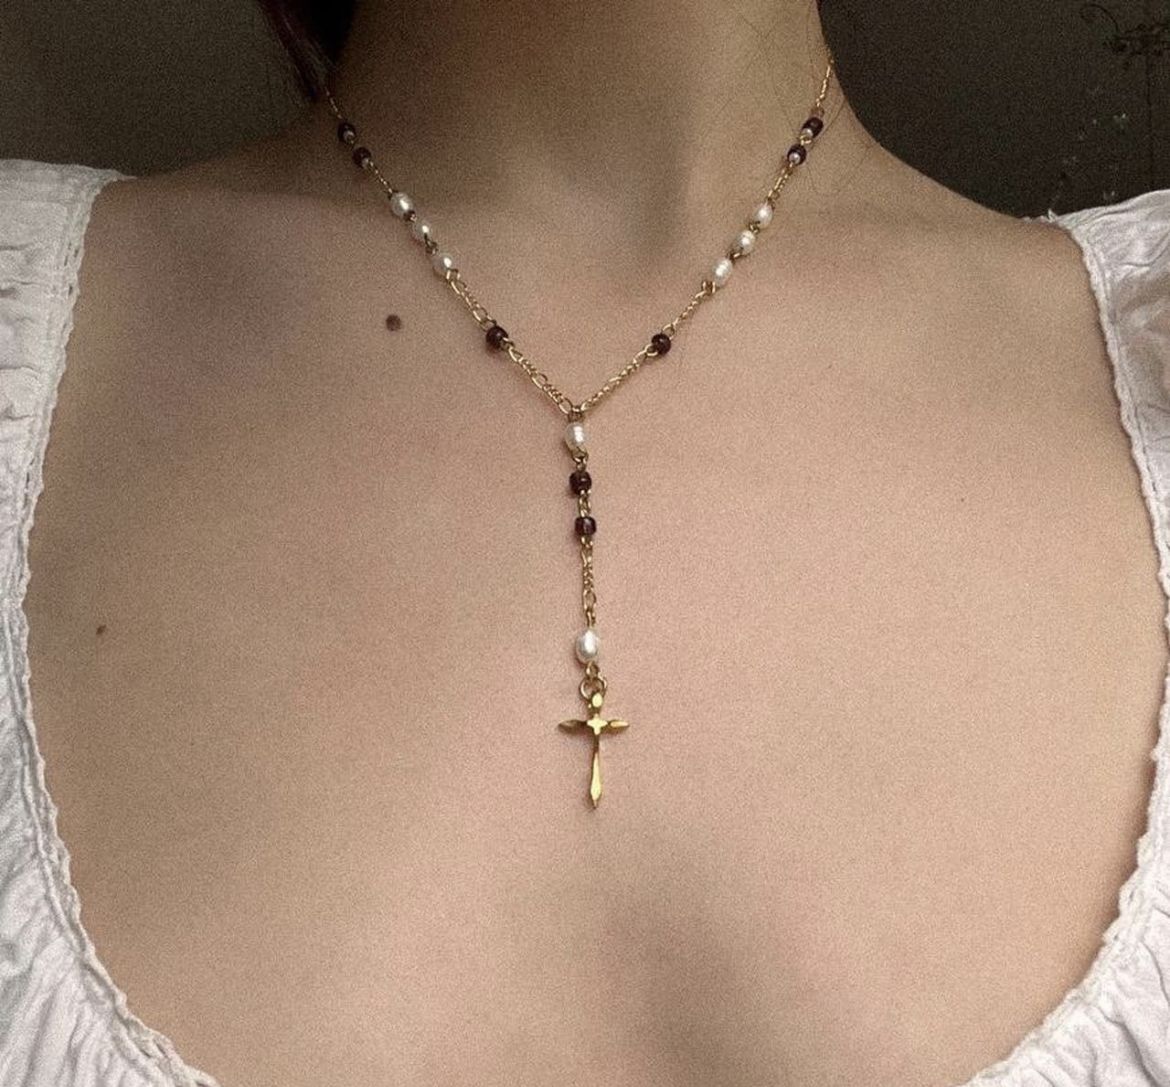 Choose rosary necklace for unique appearances